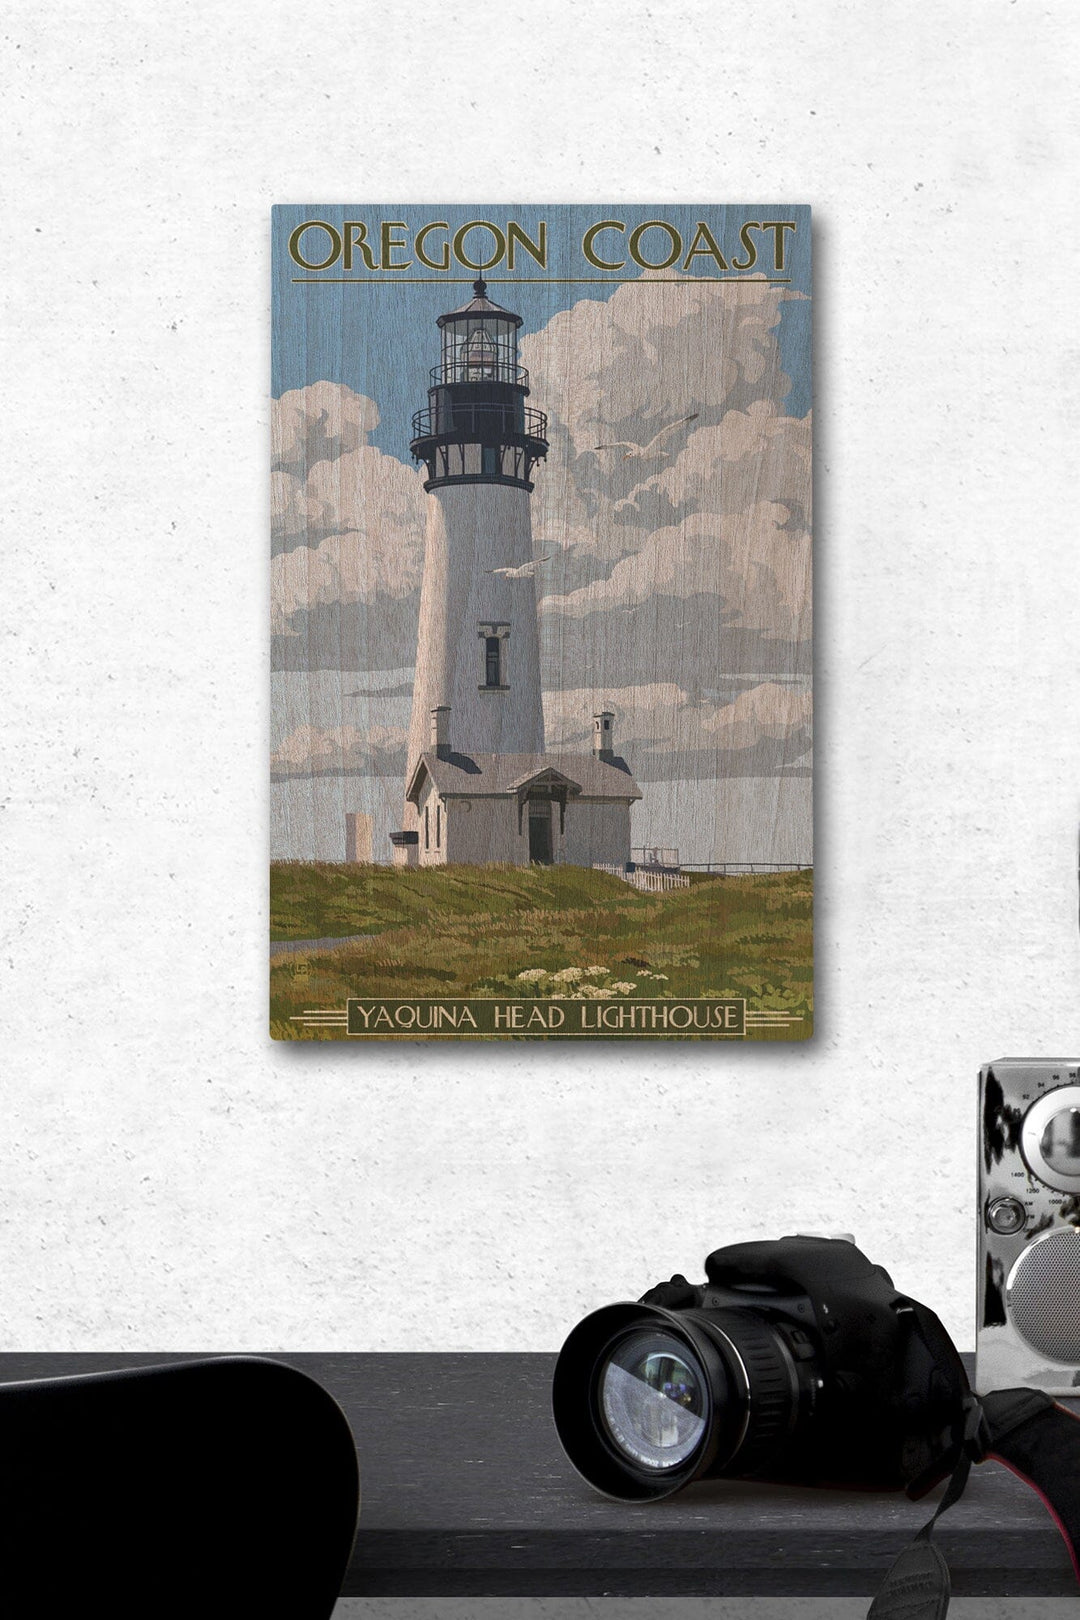 Oregon Coast, Yaquina Head Lighthouse, Lantern Press Artwork, Wood Signs and Postcards Wood Lantern Press 12 x 18 Wood Gallery Print 